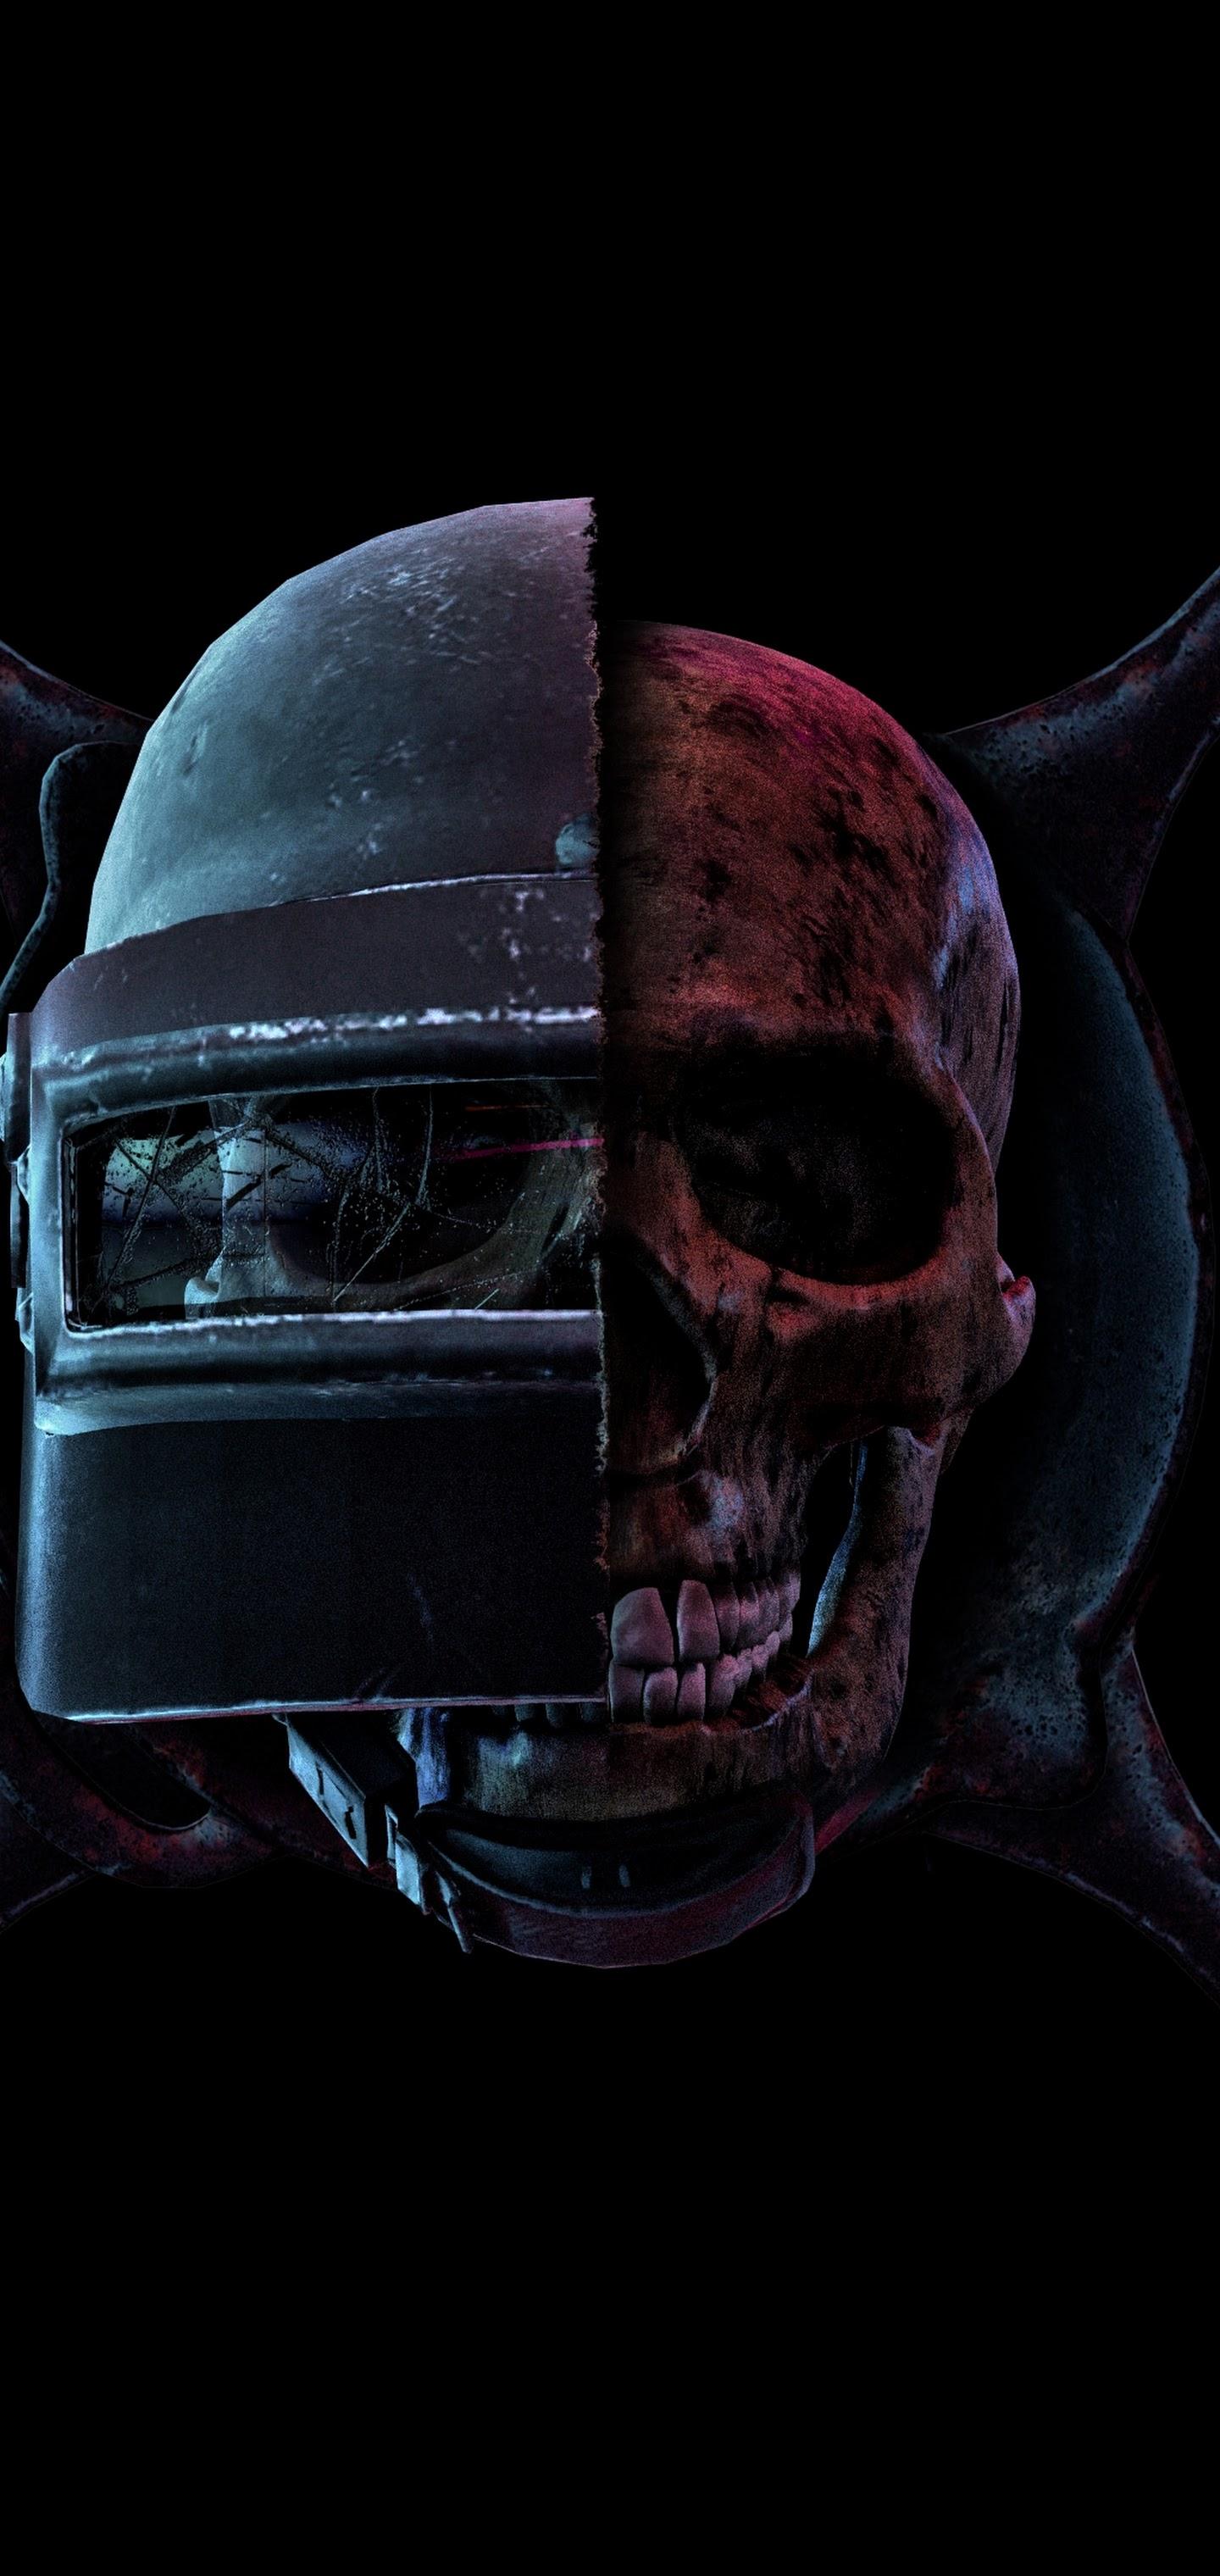 PUBG Skull Helmet Frying Pan PlayerUnknown's Battlegrounds